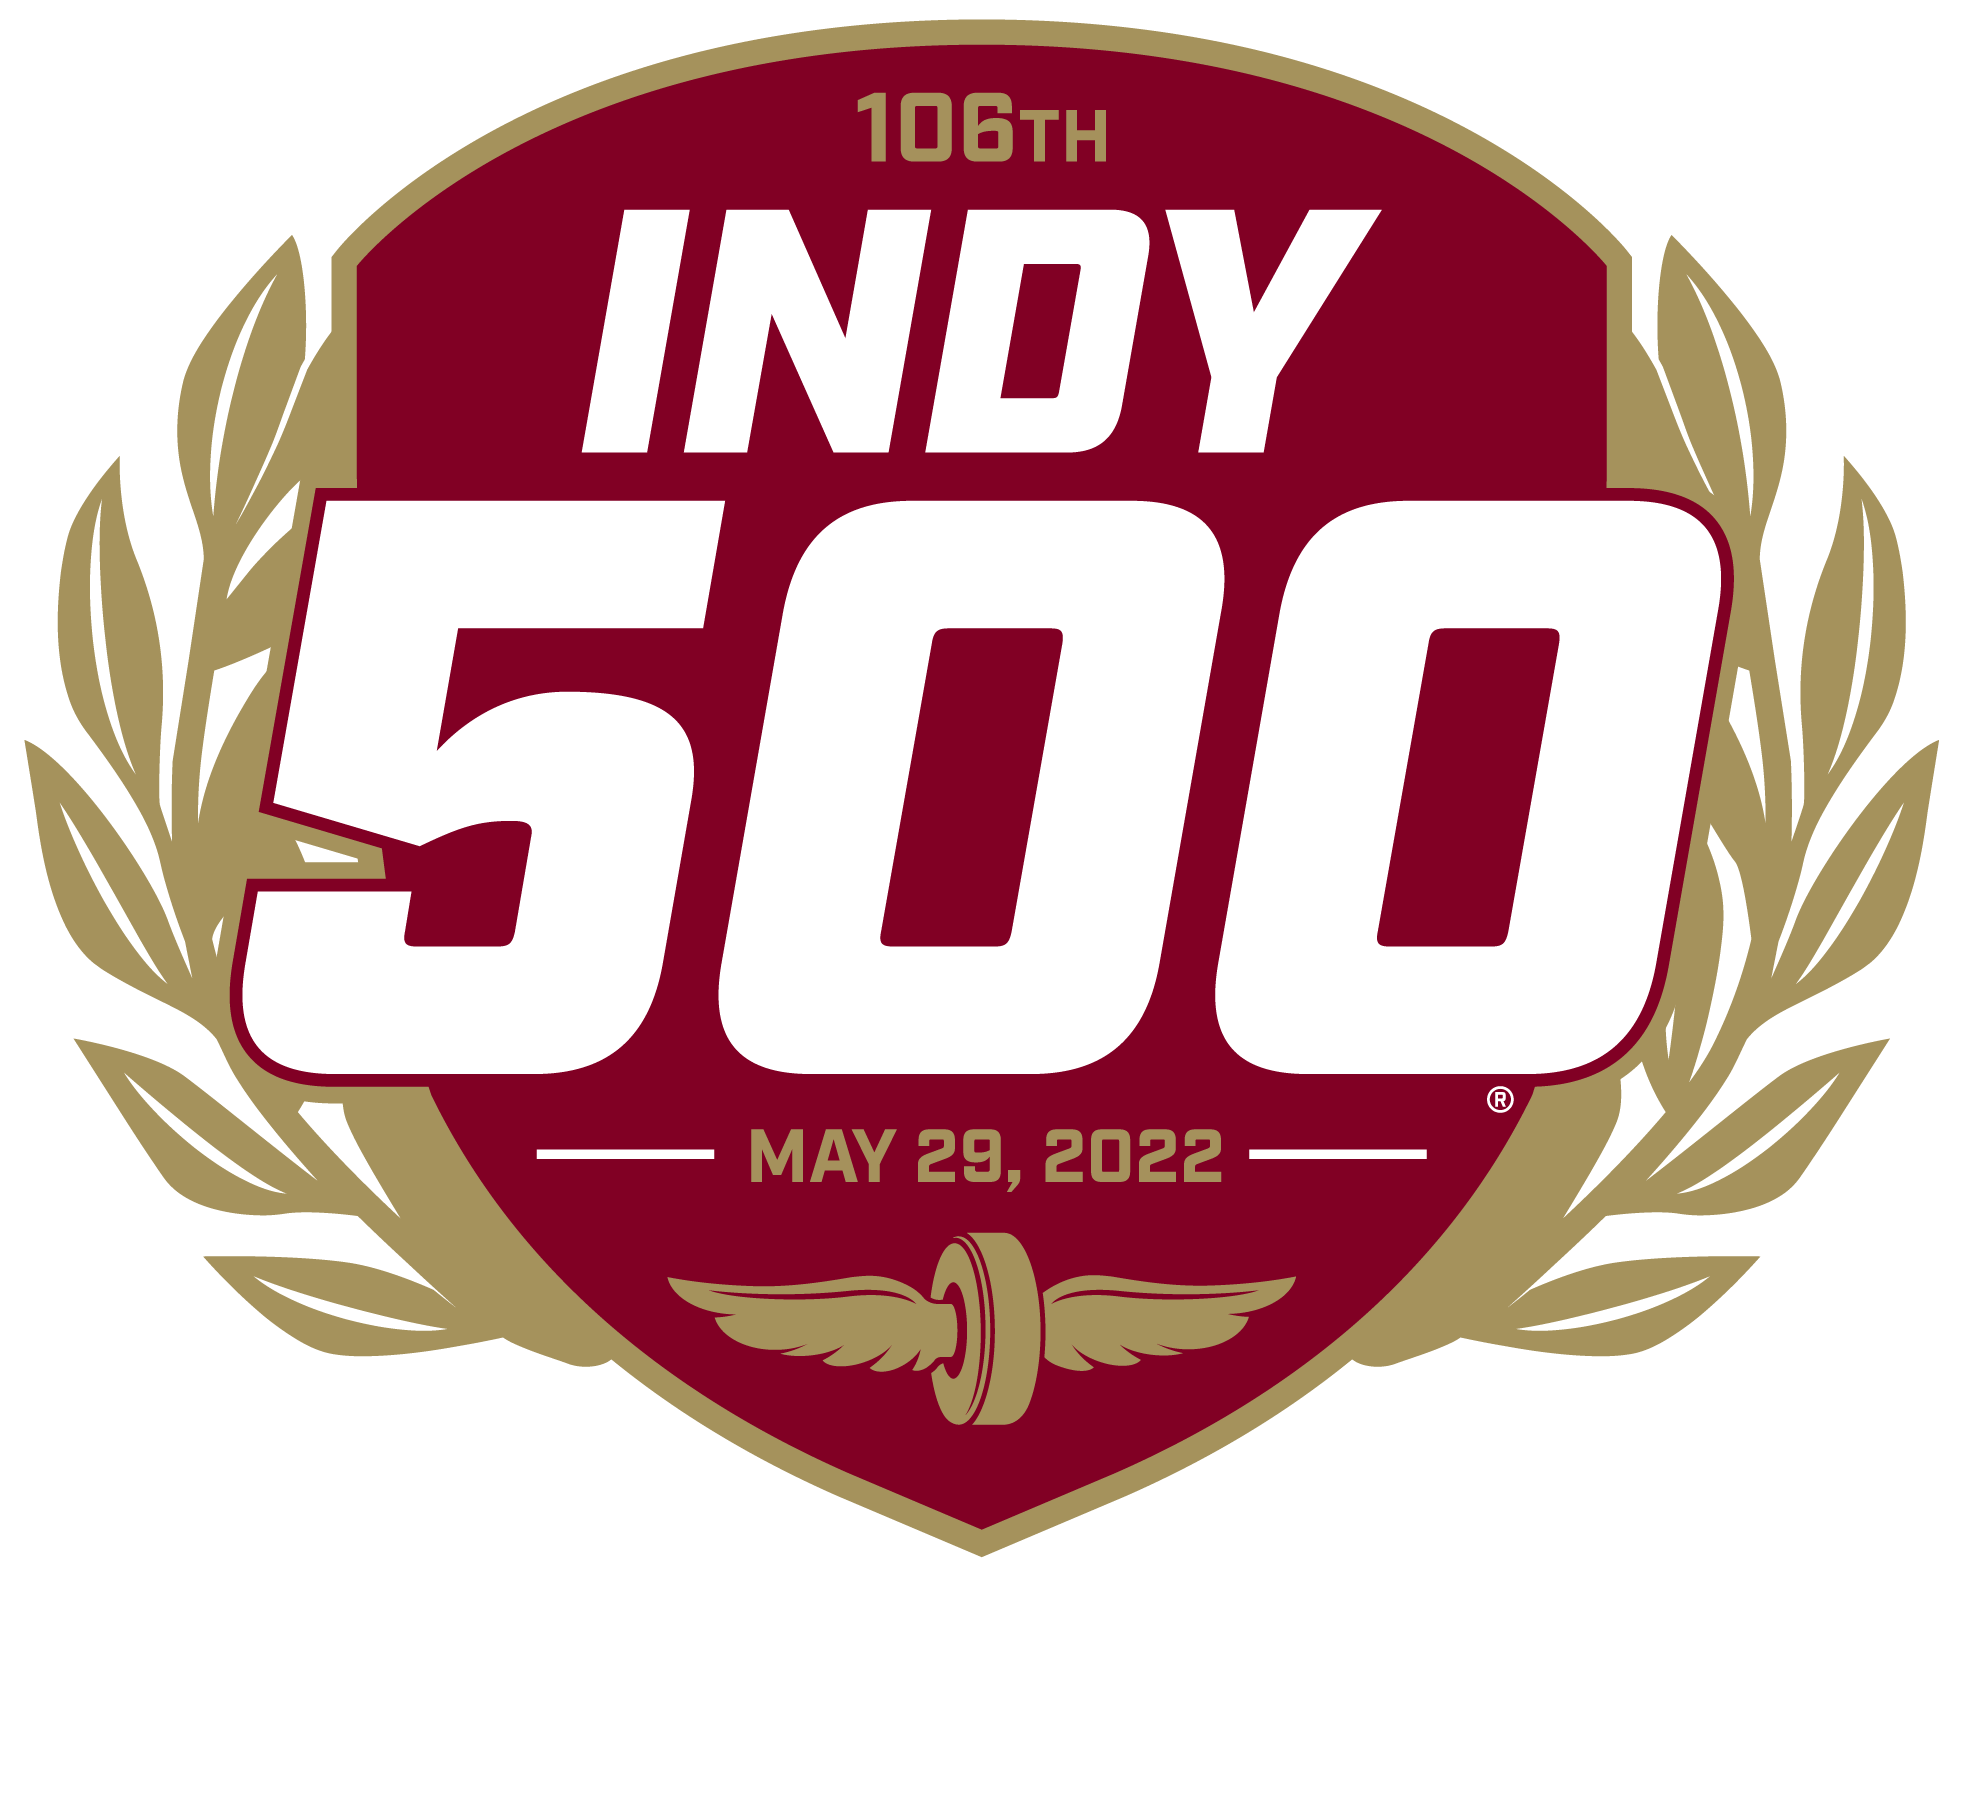 Indianapolis 500 presented by Gainbridge